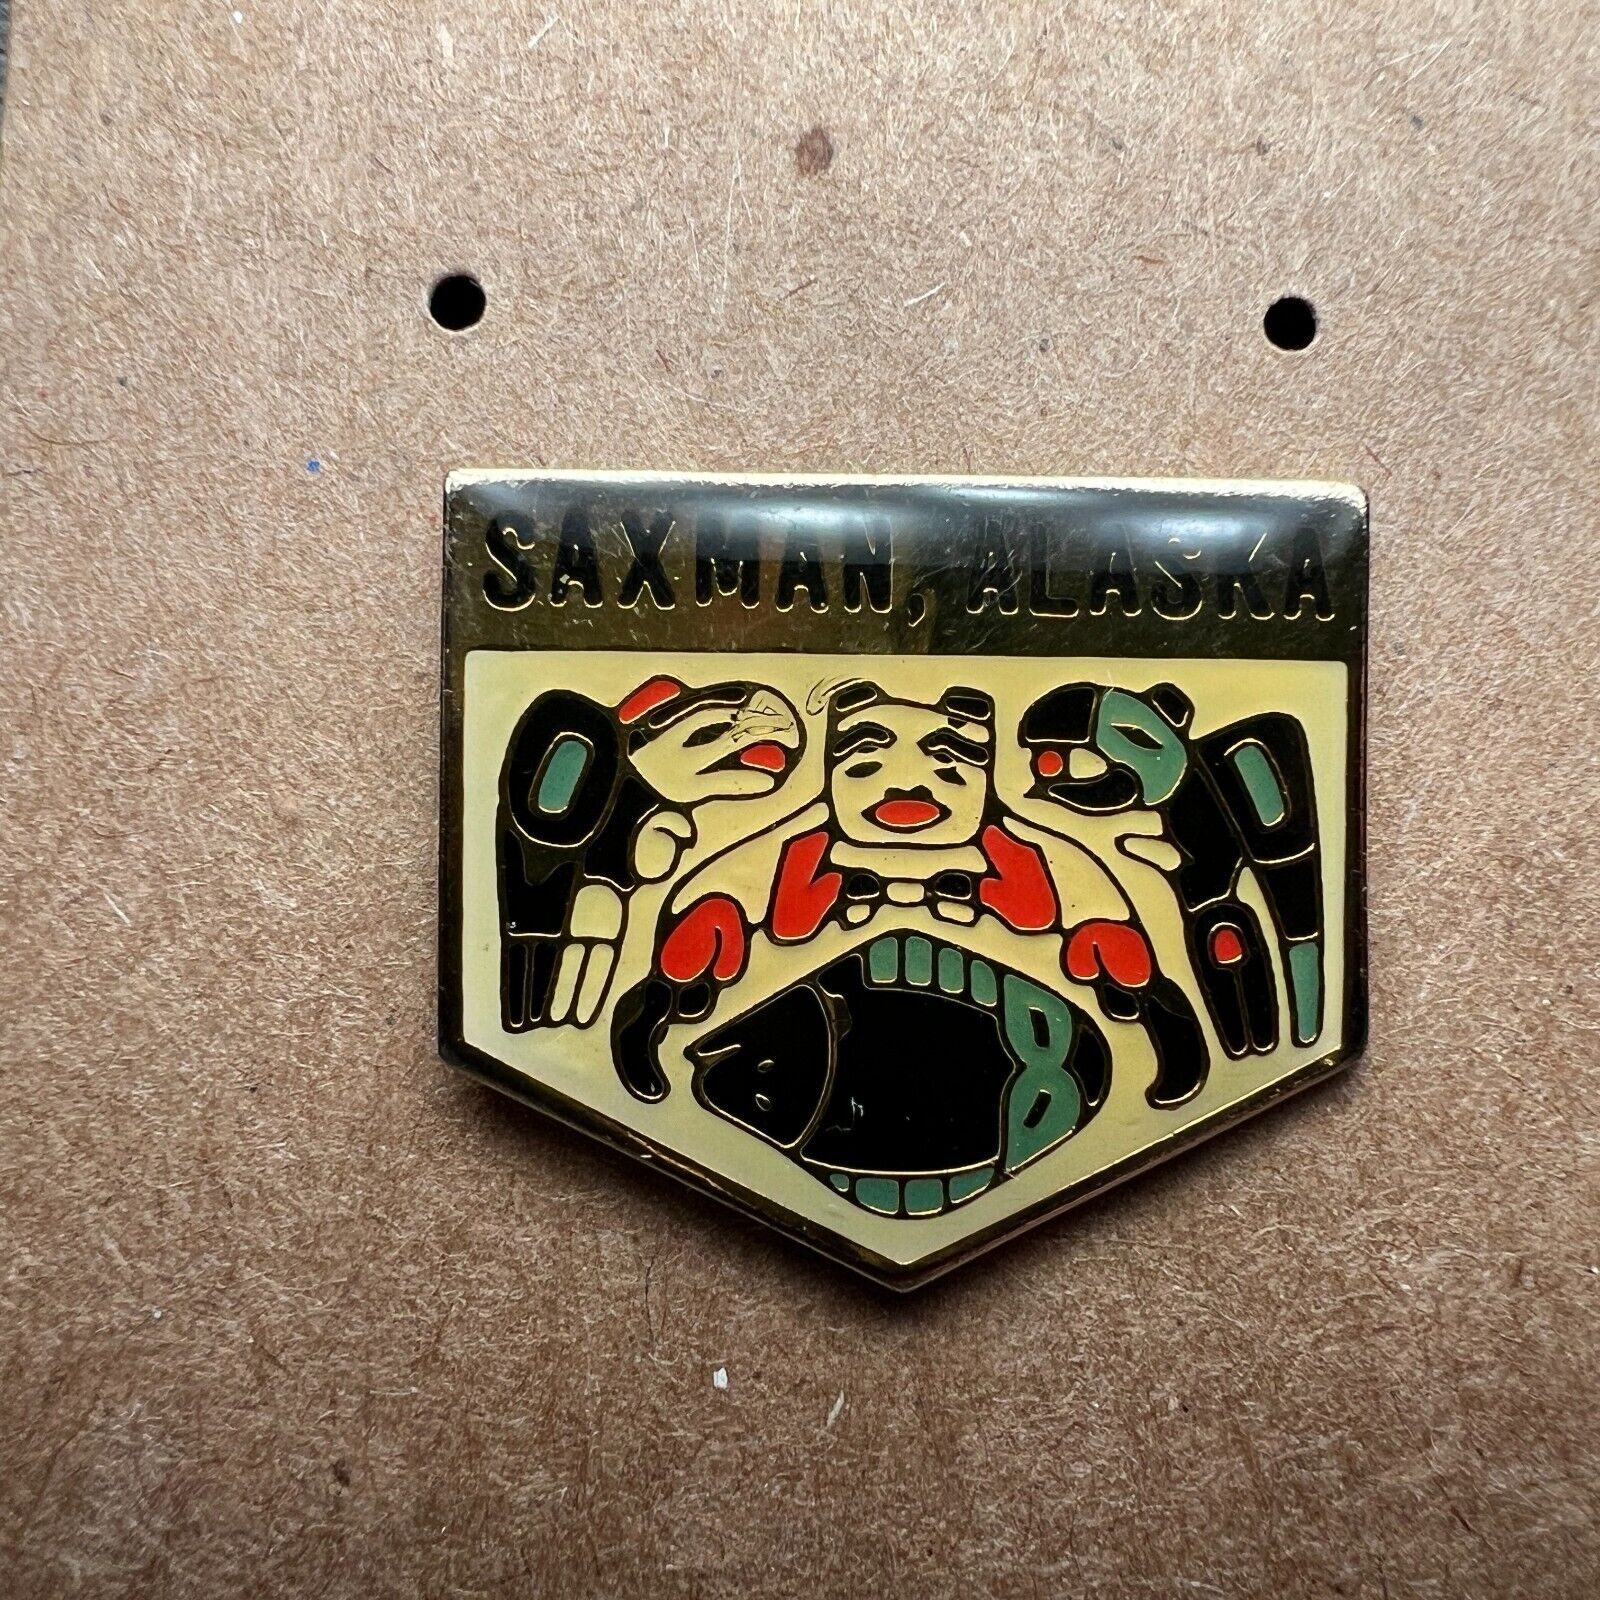 Vtg Lapel Pin Saxman Alaska Totem Pole Birds Travel Souvenir Enamel Hat Tac Pin